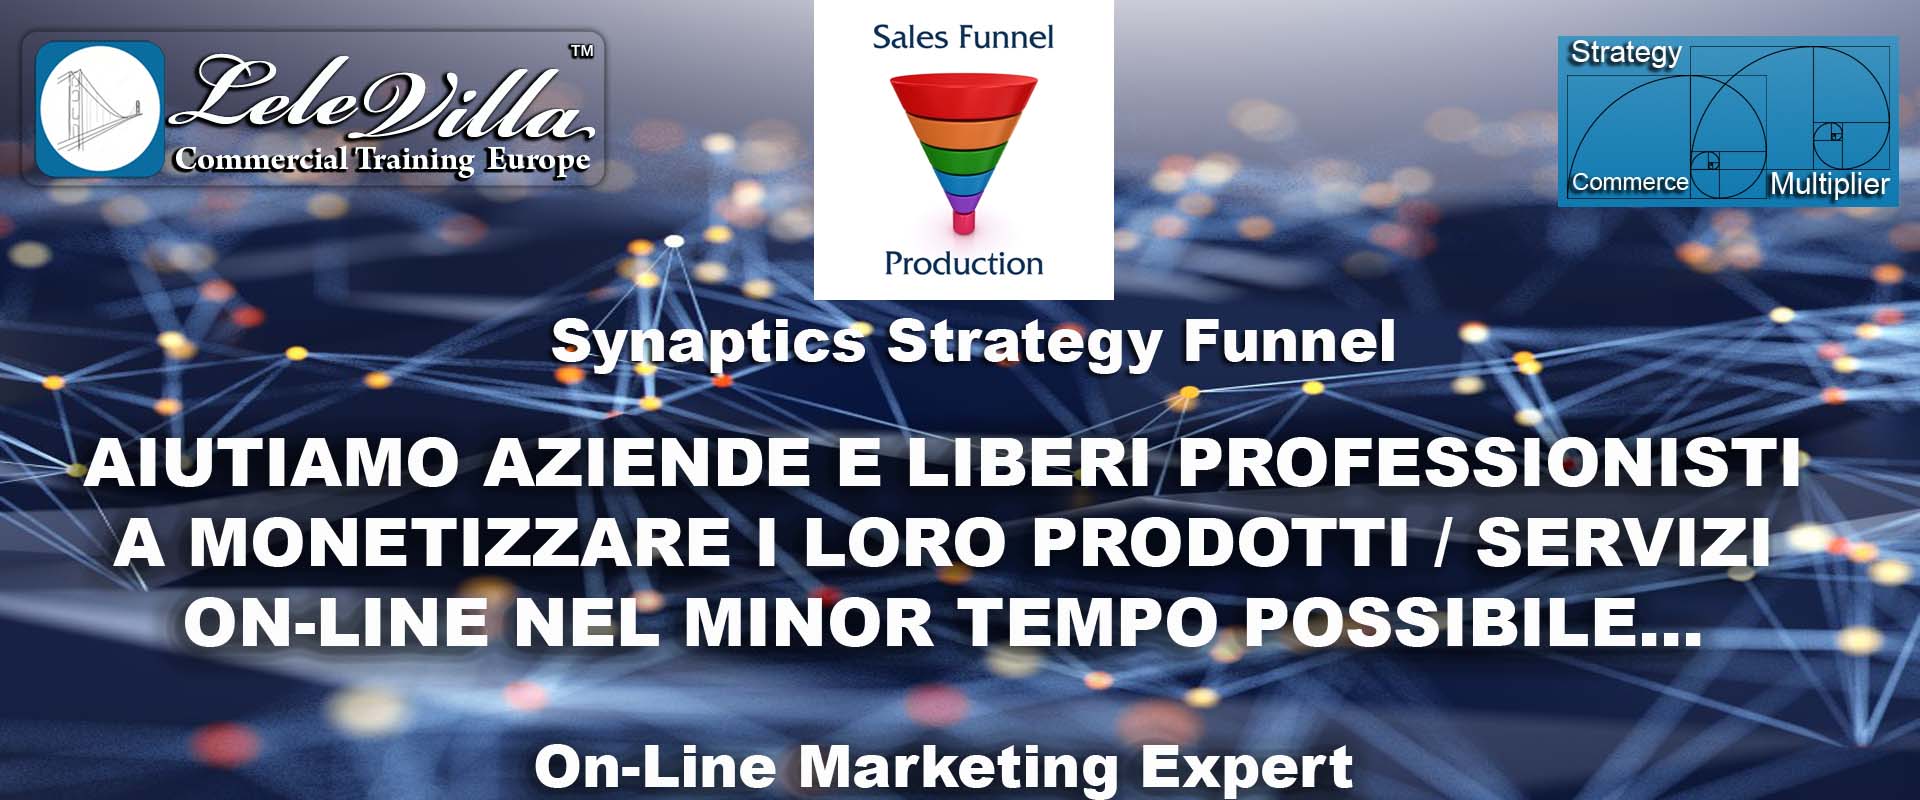 Synaptics-Strategy-Funnel-Lele-Villa-CTE